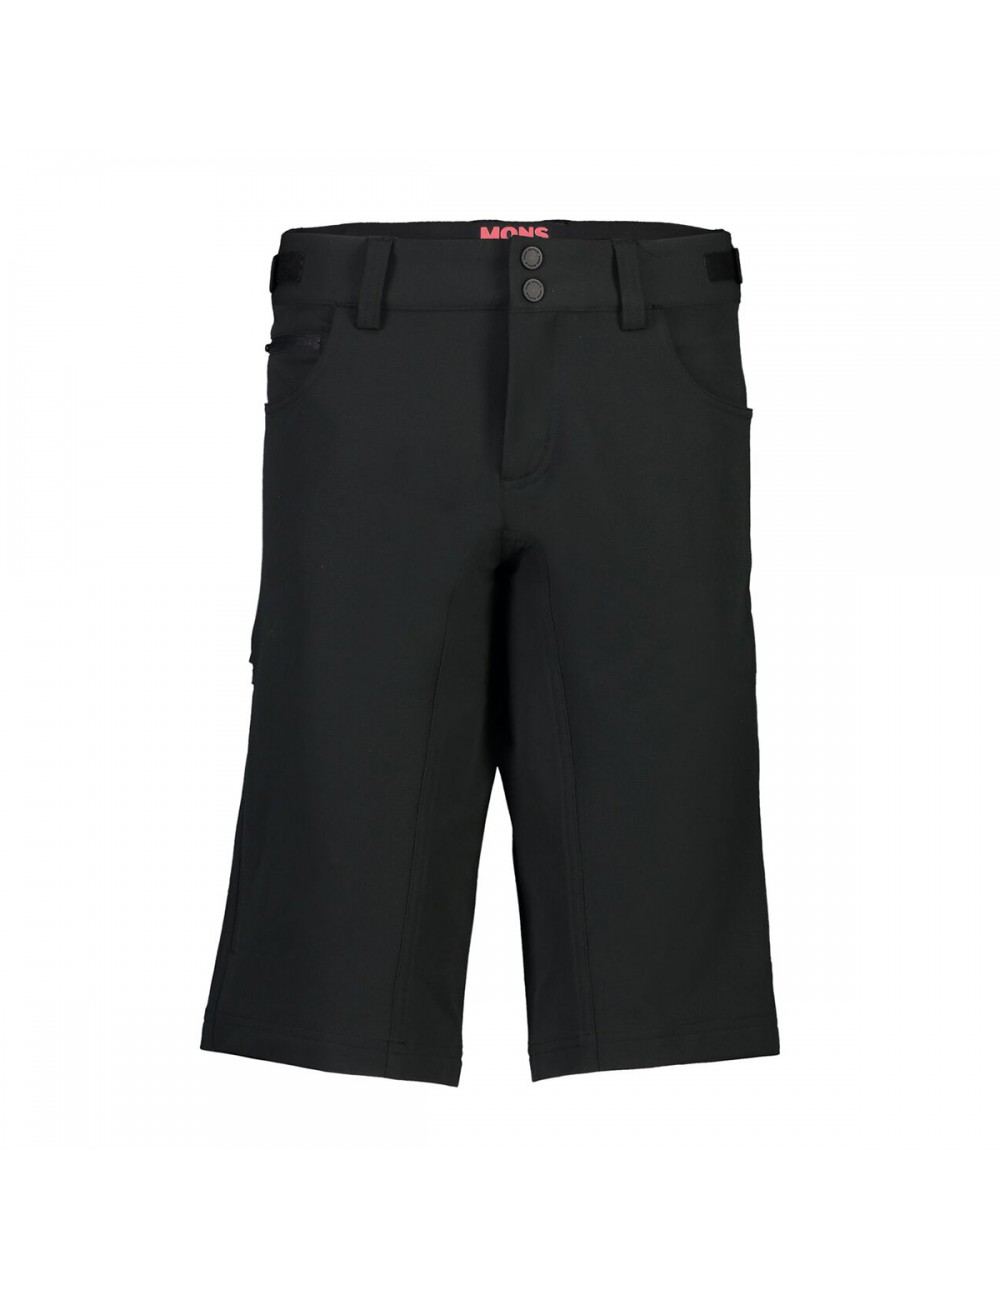 Mons Royale Momentum 2.0 Bike Shorts - Black